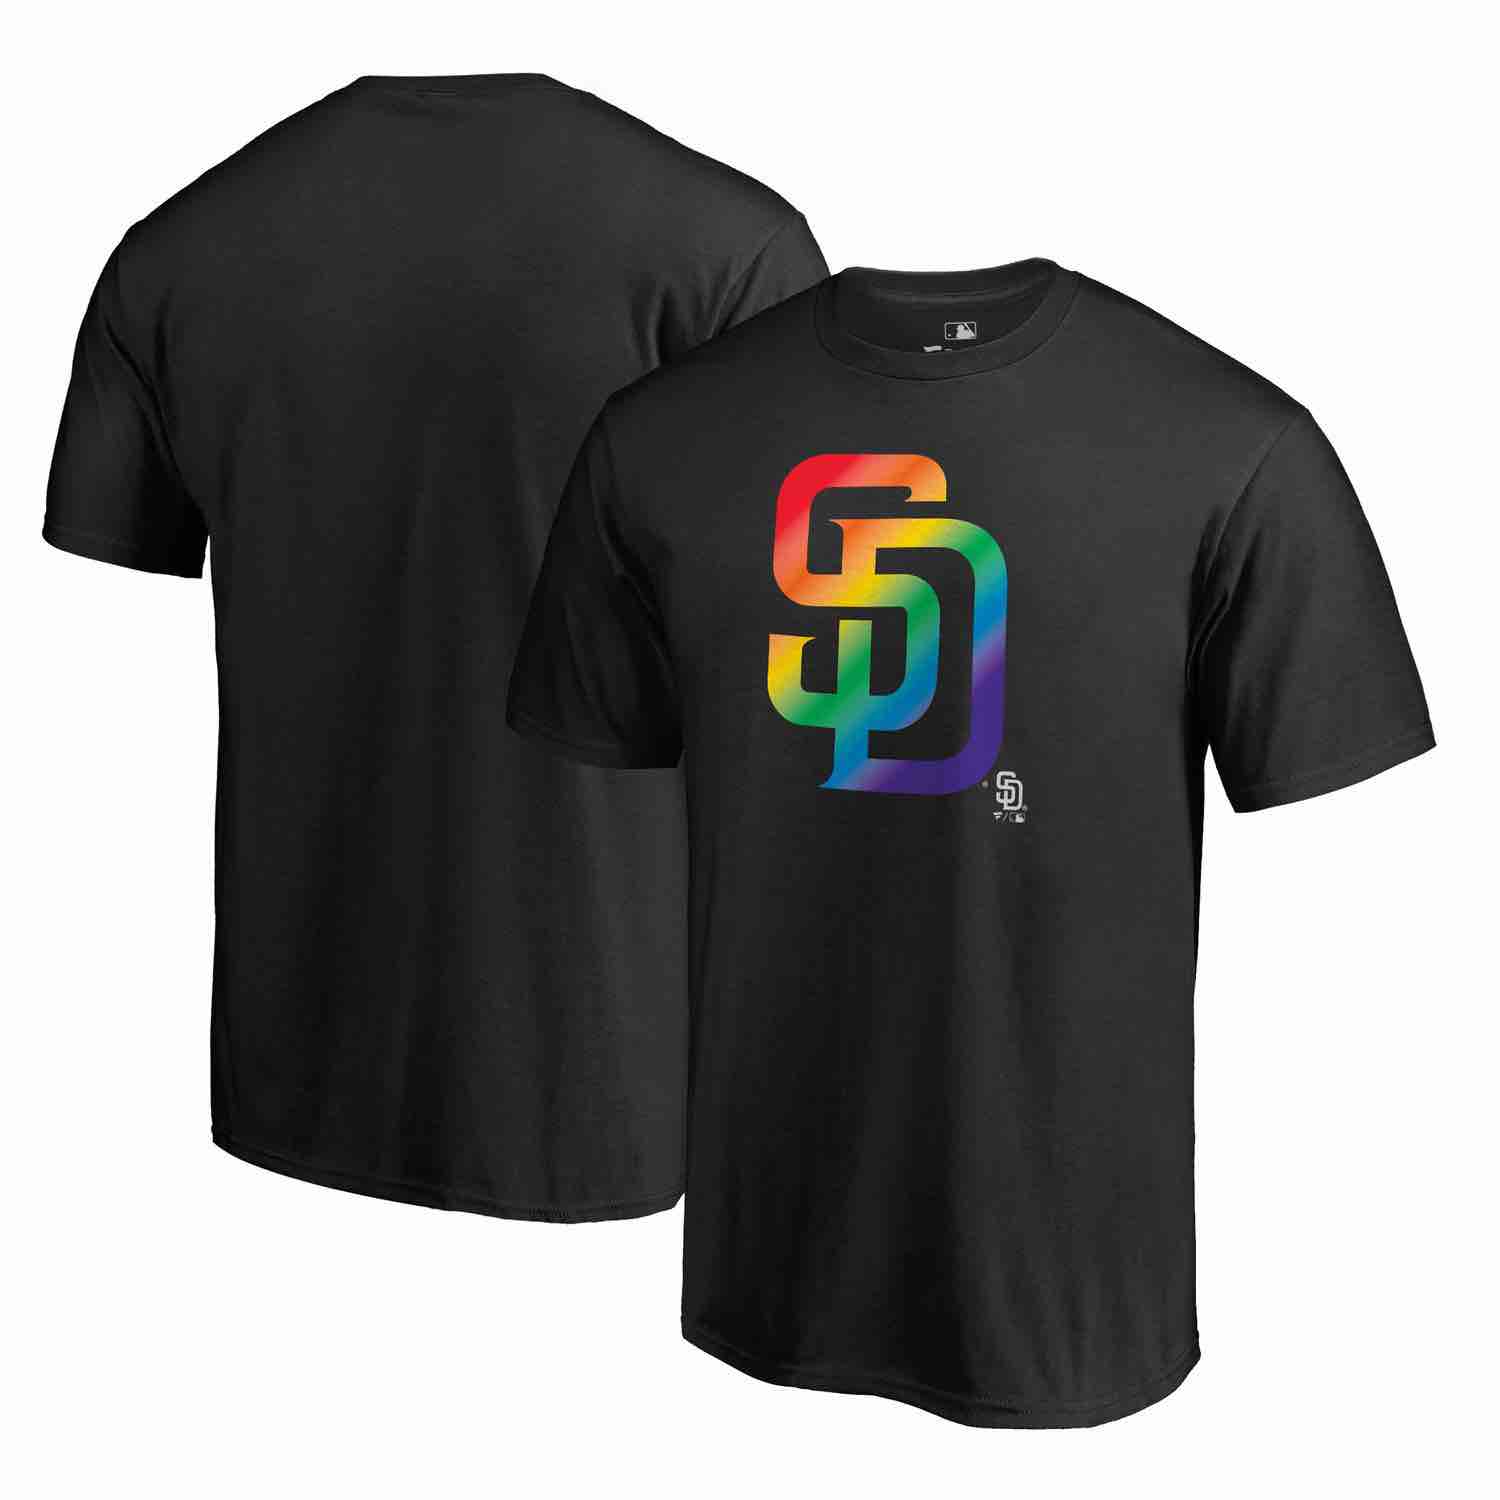 Mens San Diego Padres Fanatics Branded Black Big & Tall Pride T-Shirt